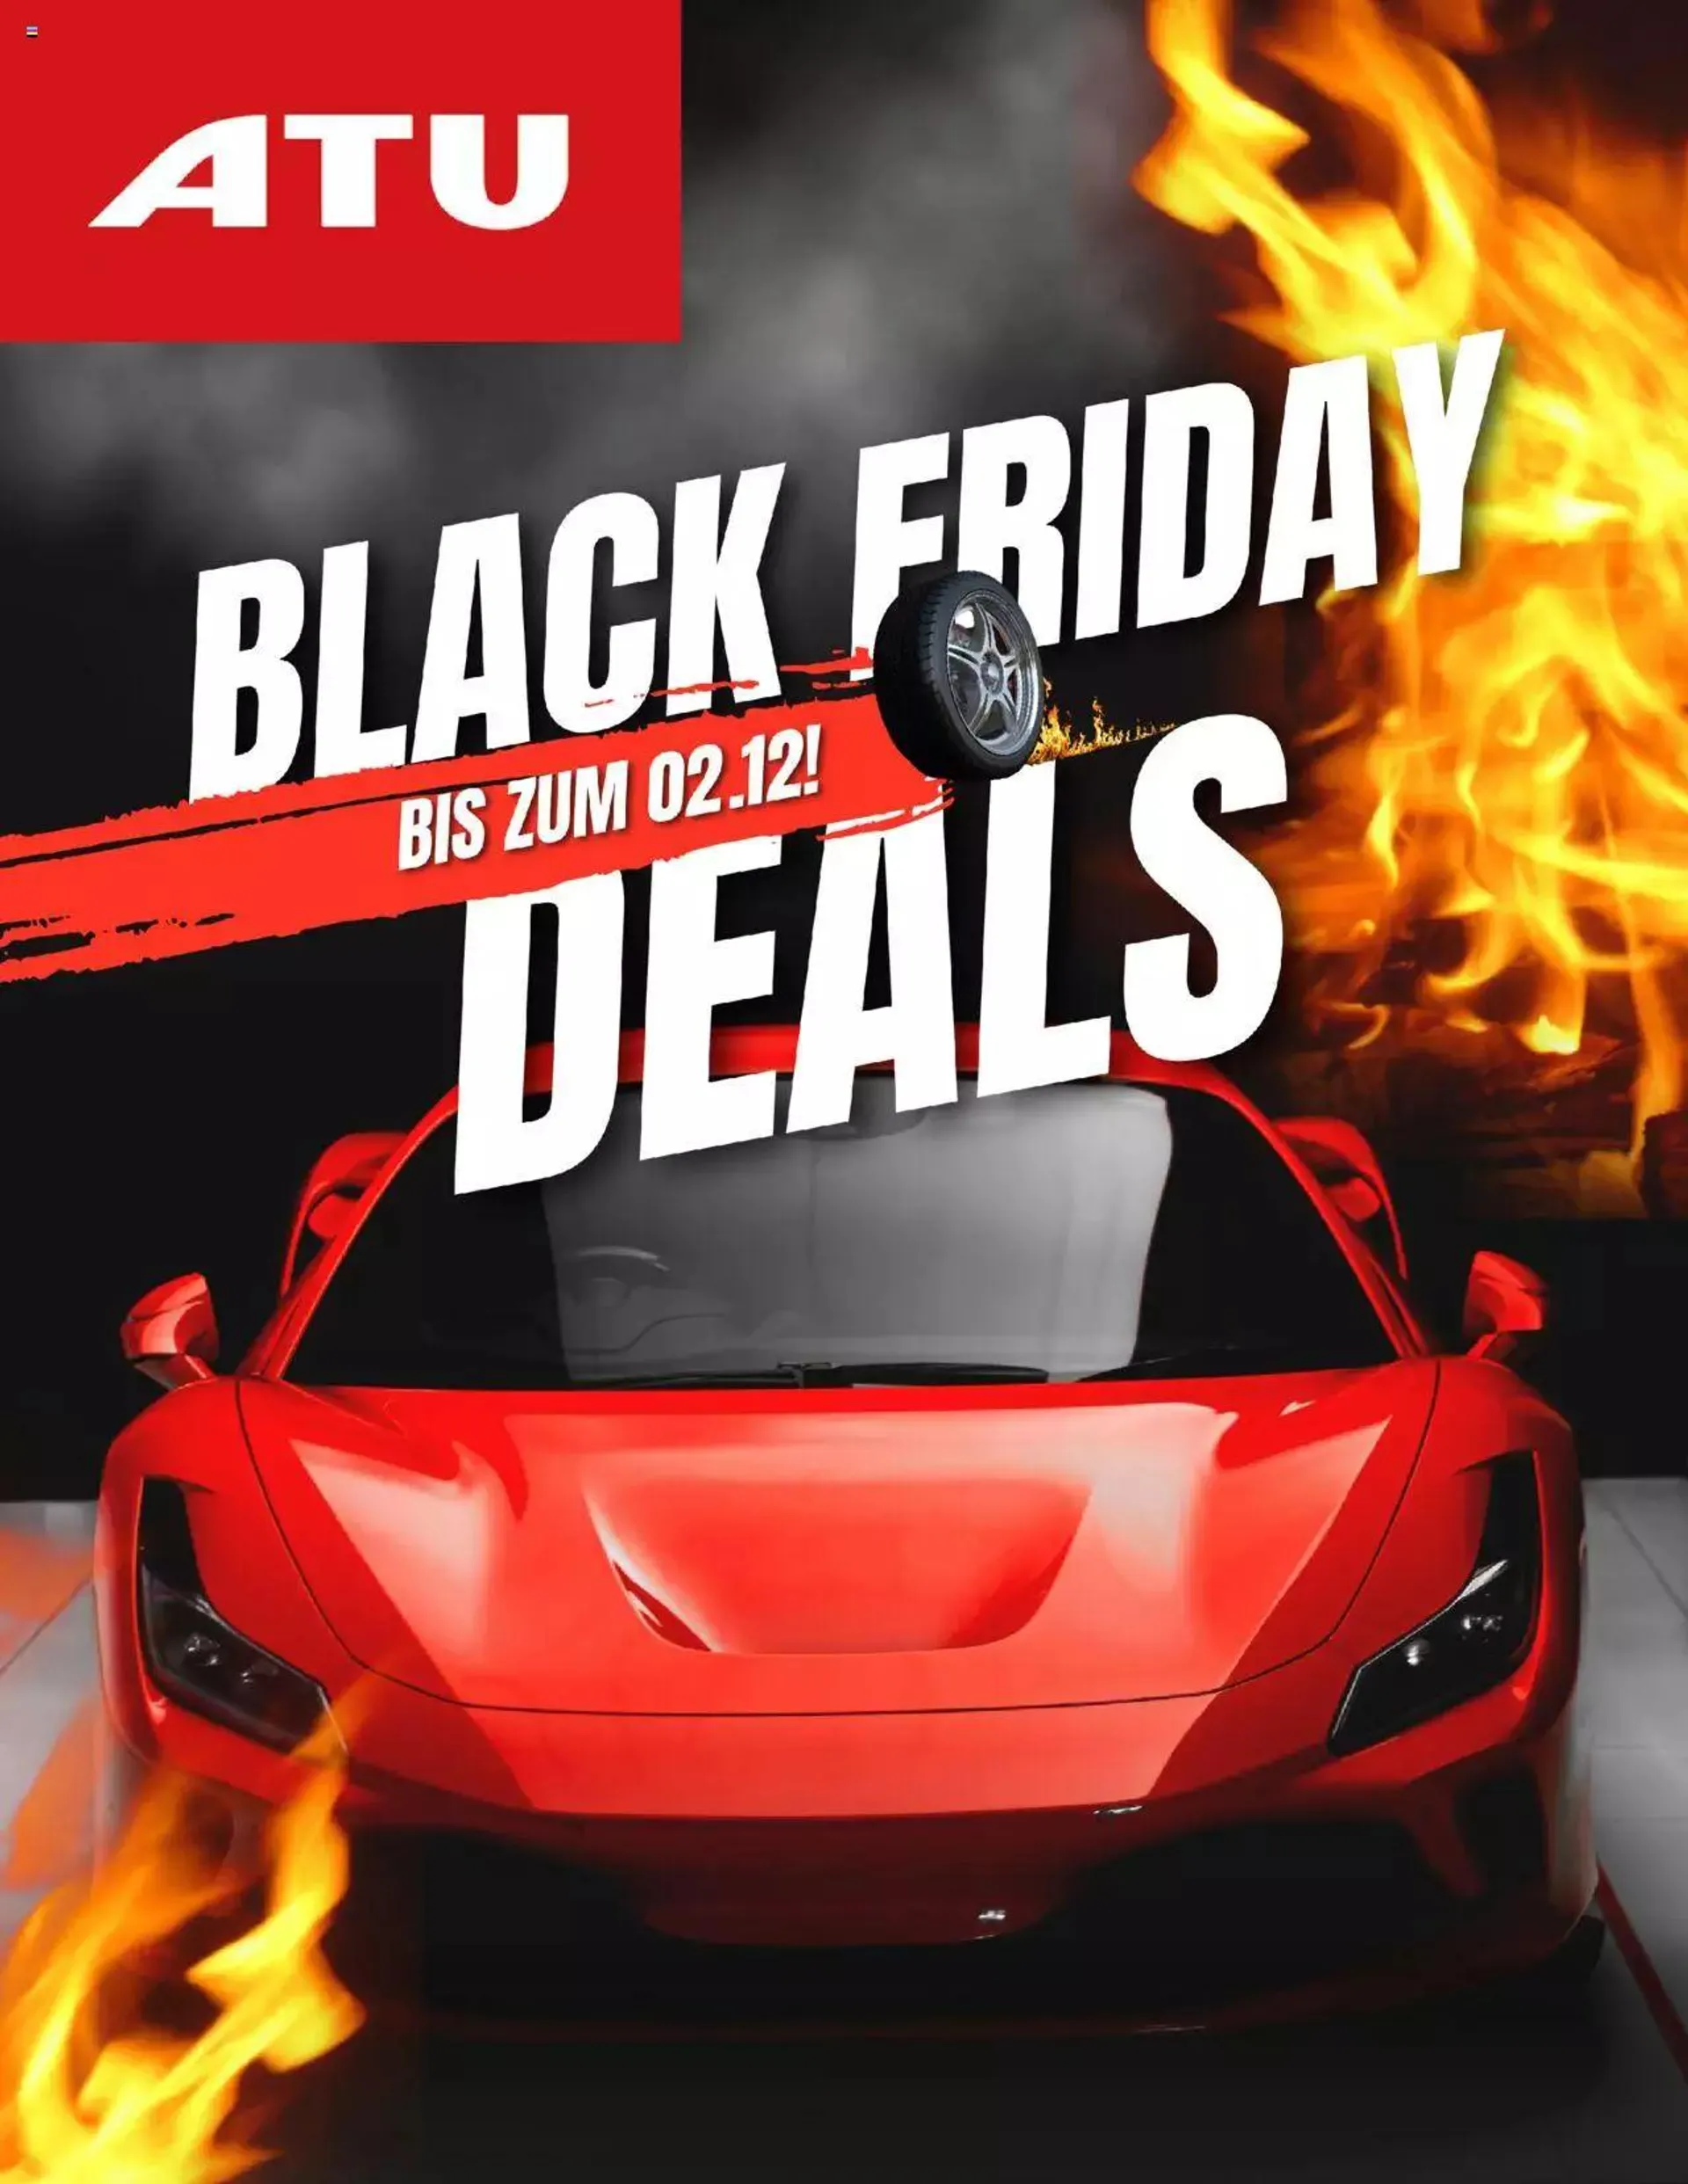 ATU Black Friday Deals - 0